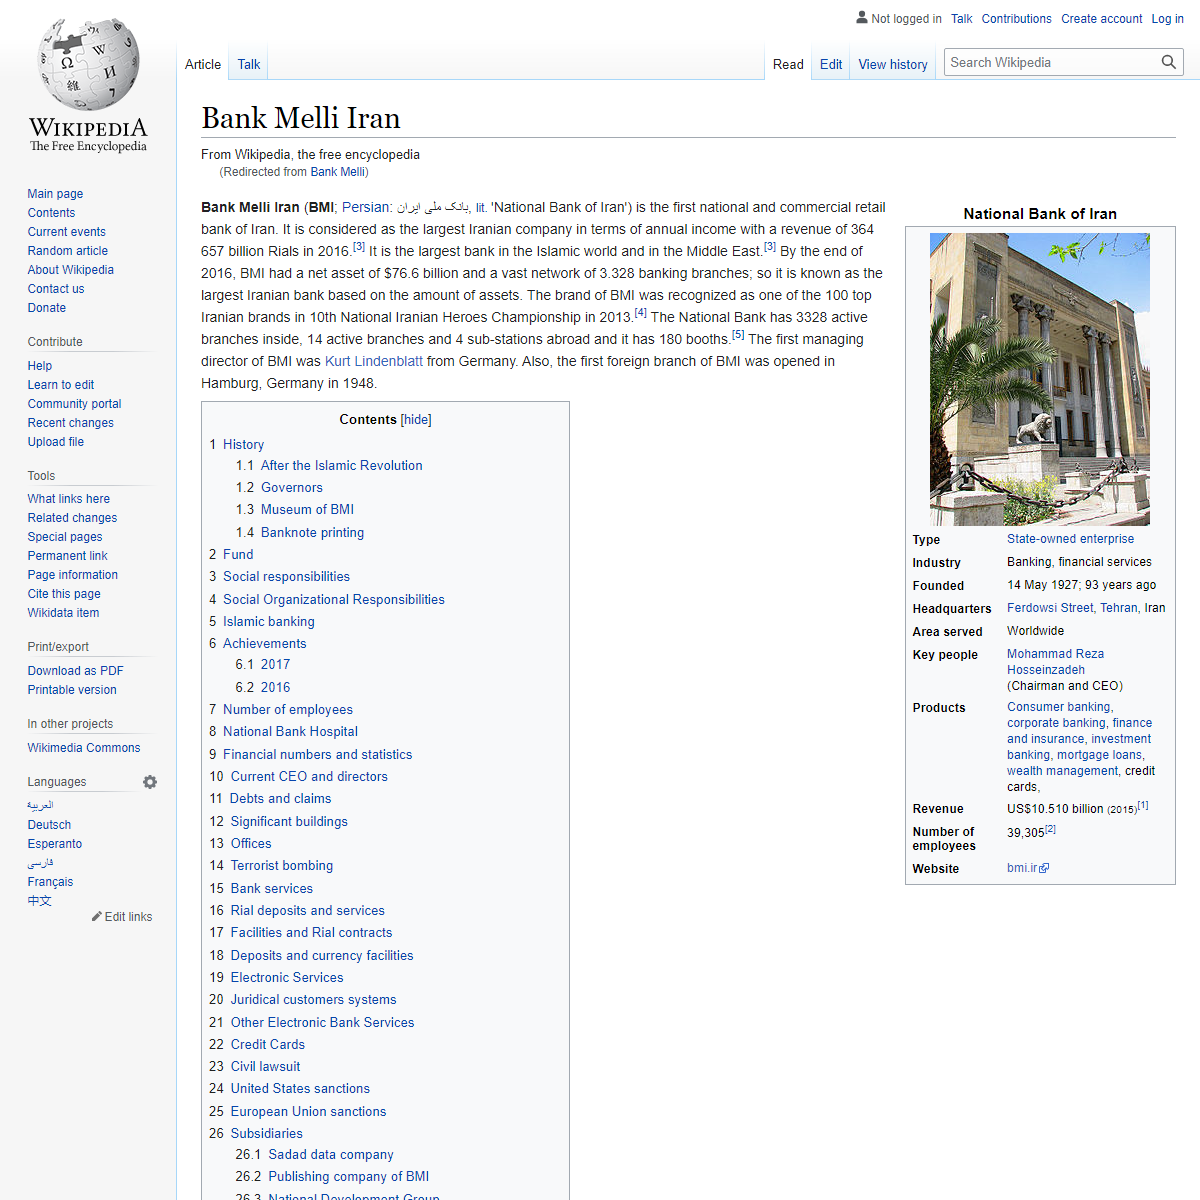 A complete backup of https://en.wikipedia.org/wiki/Bank_Melli